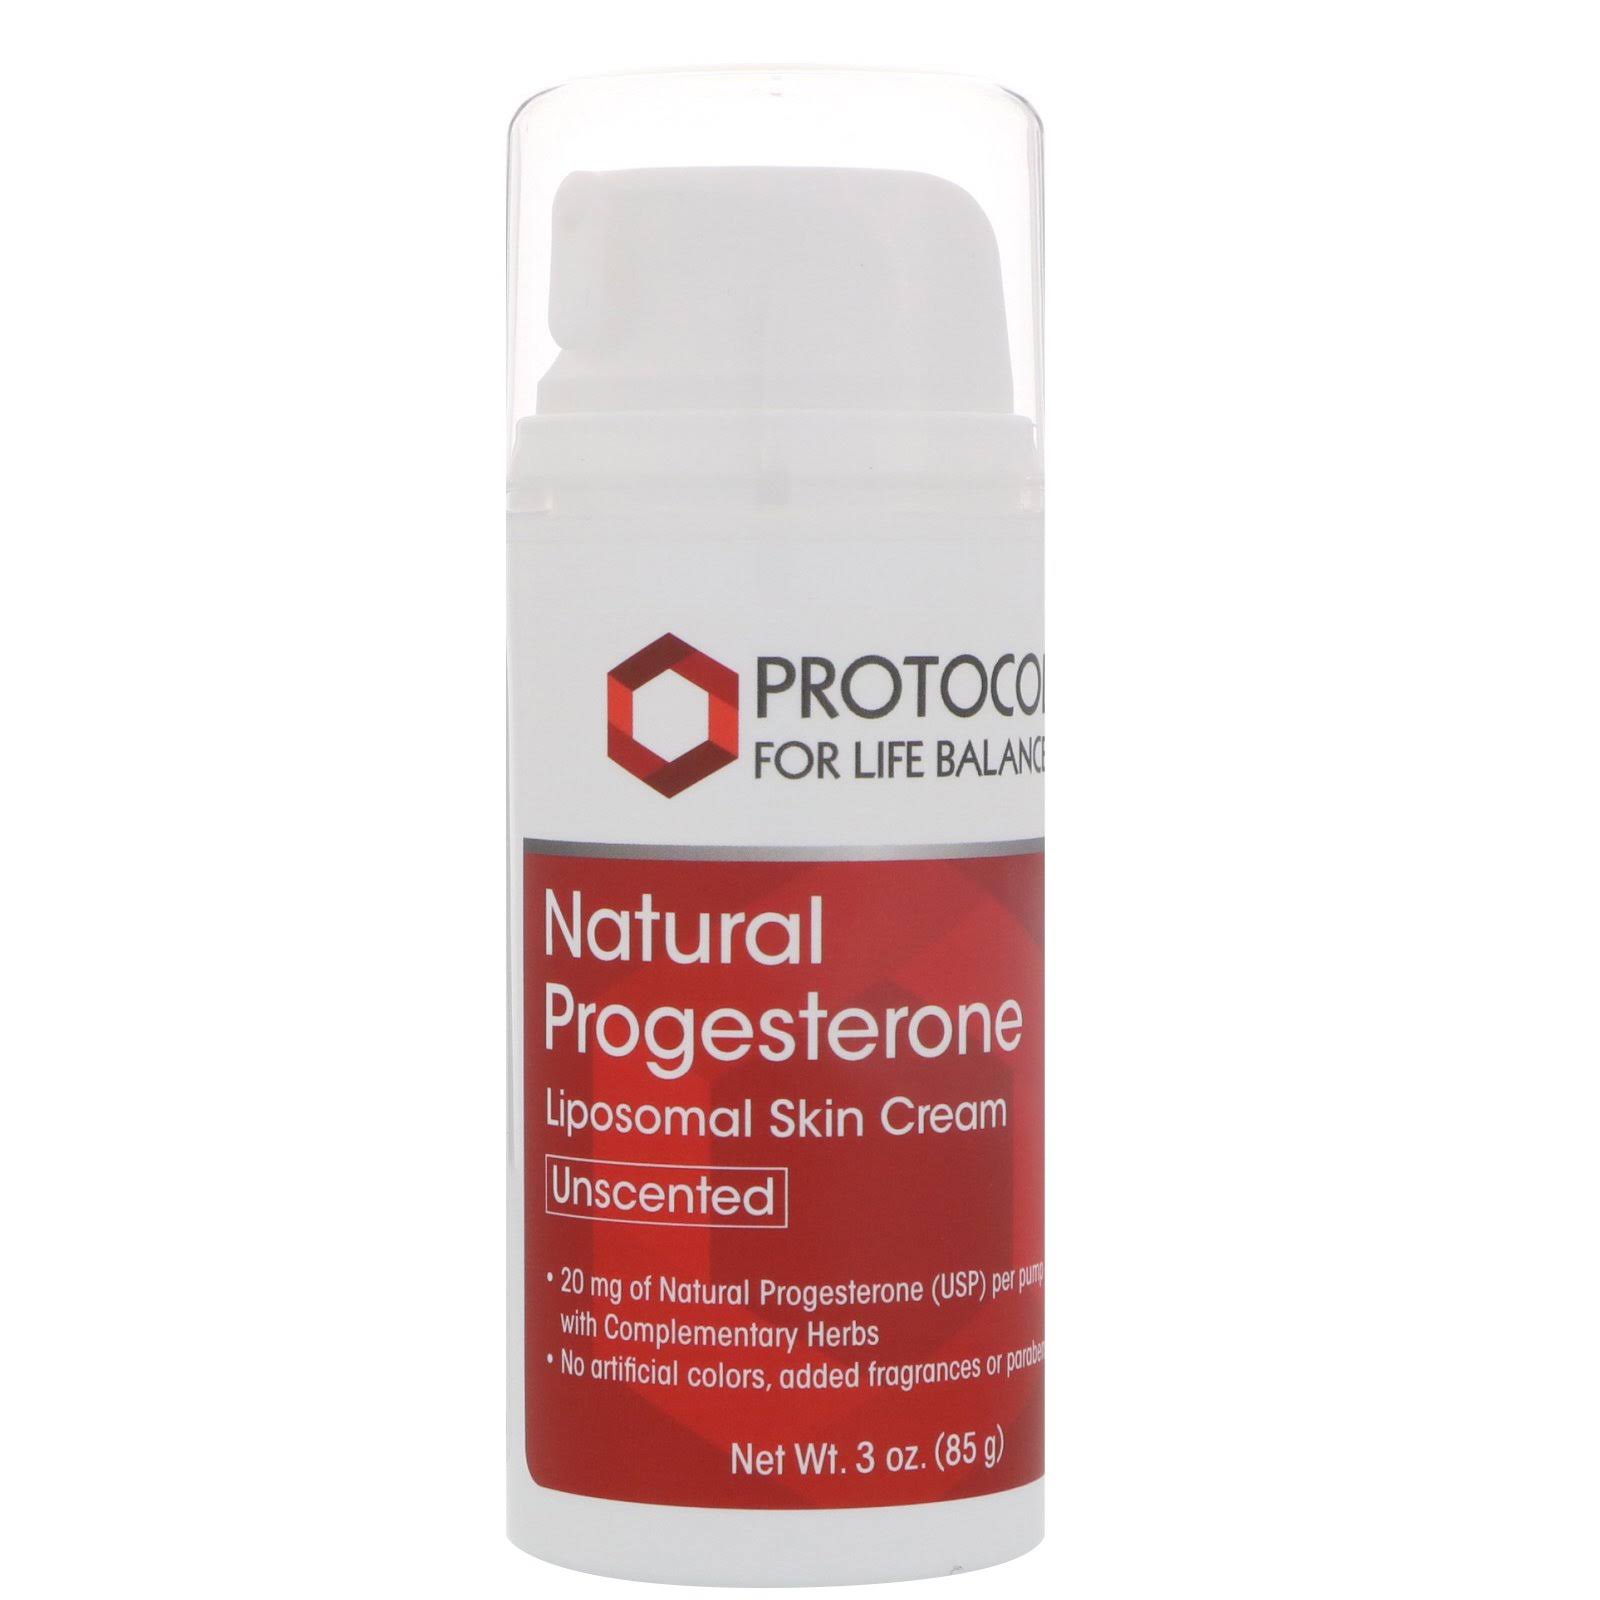 Protocol For Life Balance Natural Progesterone Cream - 3oz